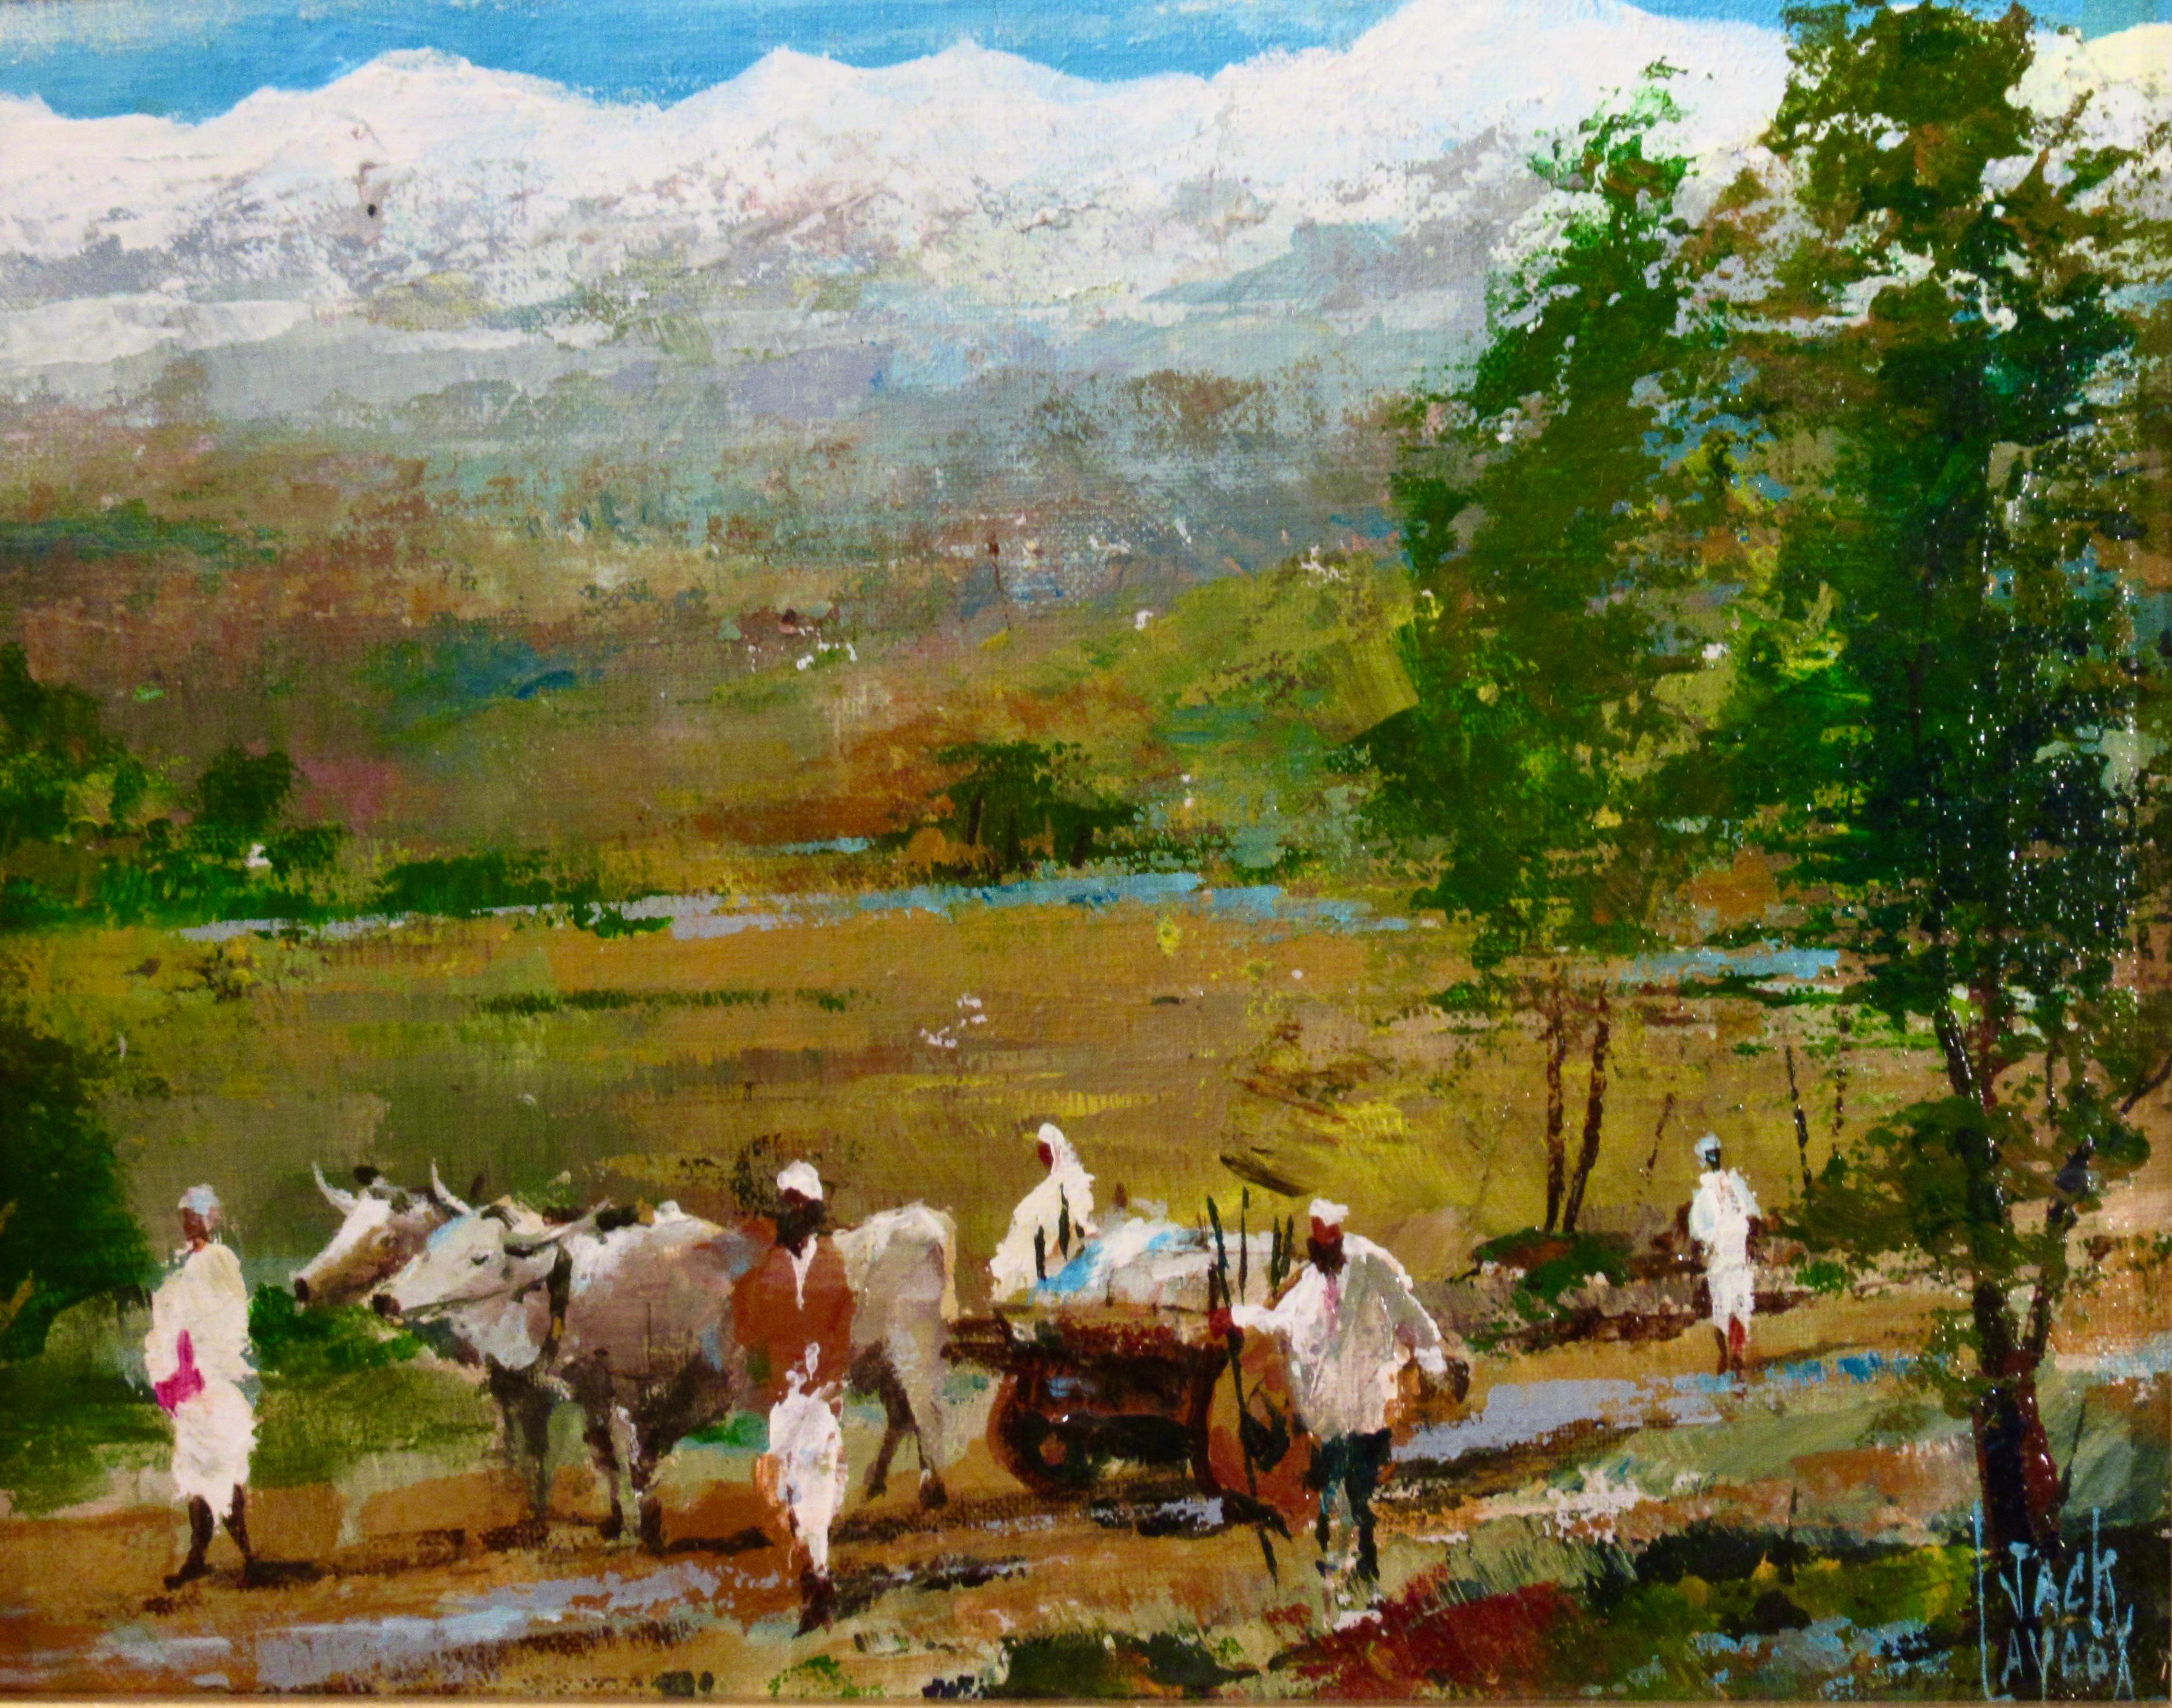 Northern India, Near Himalaya Range - Painting by William Jack Laycox